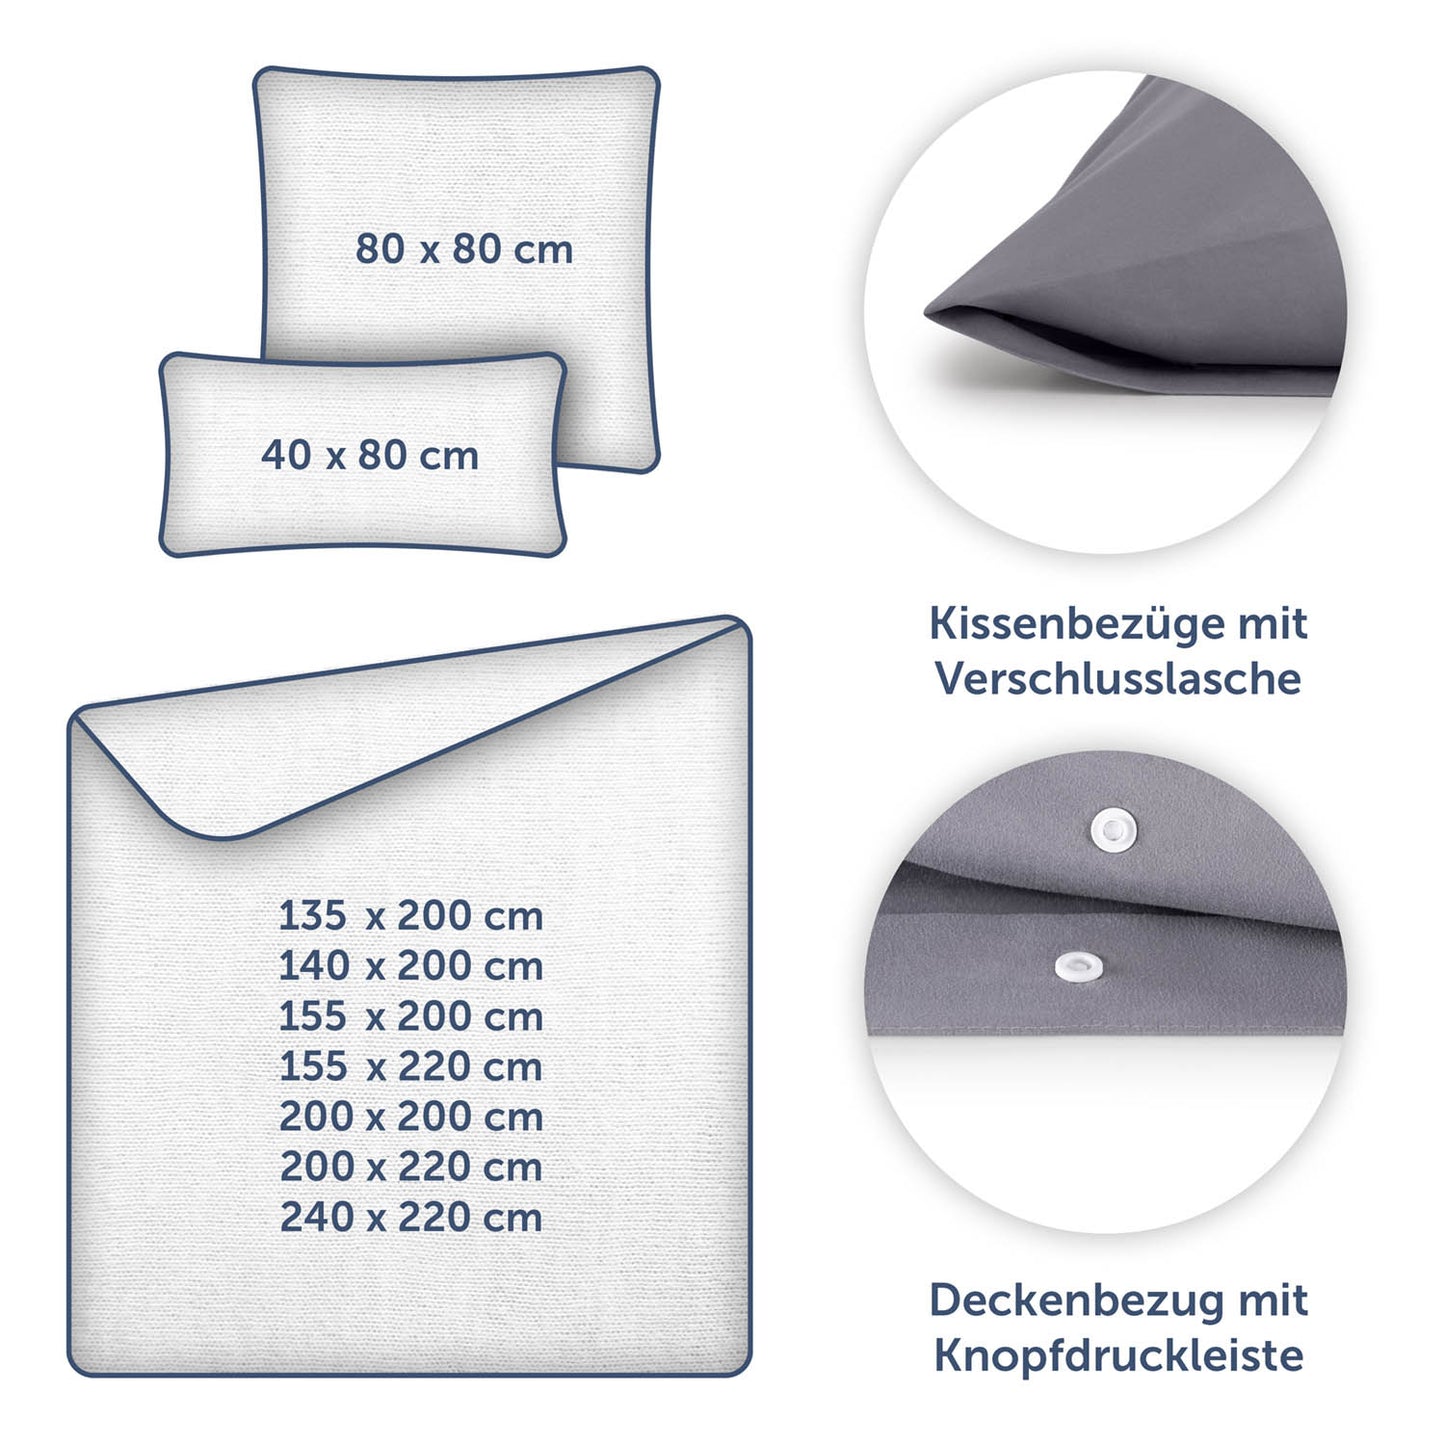 Bettbezug Set aus Mikrofaser - Superweich, Oekotex Zertifiziert, 155x220cm